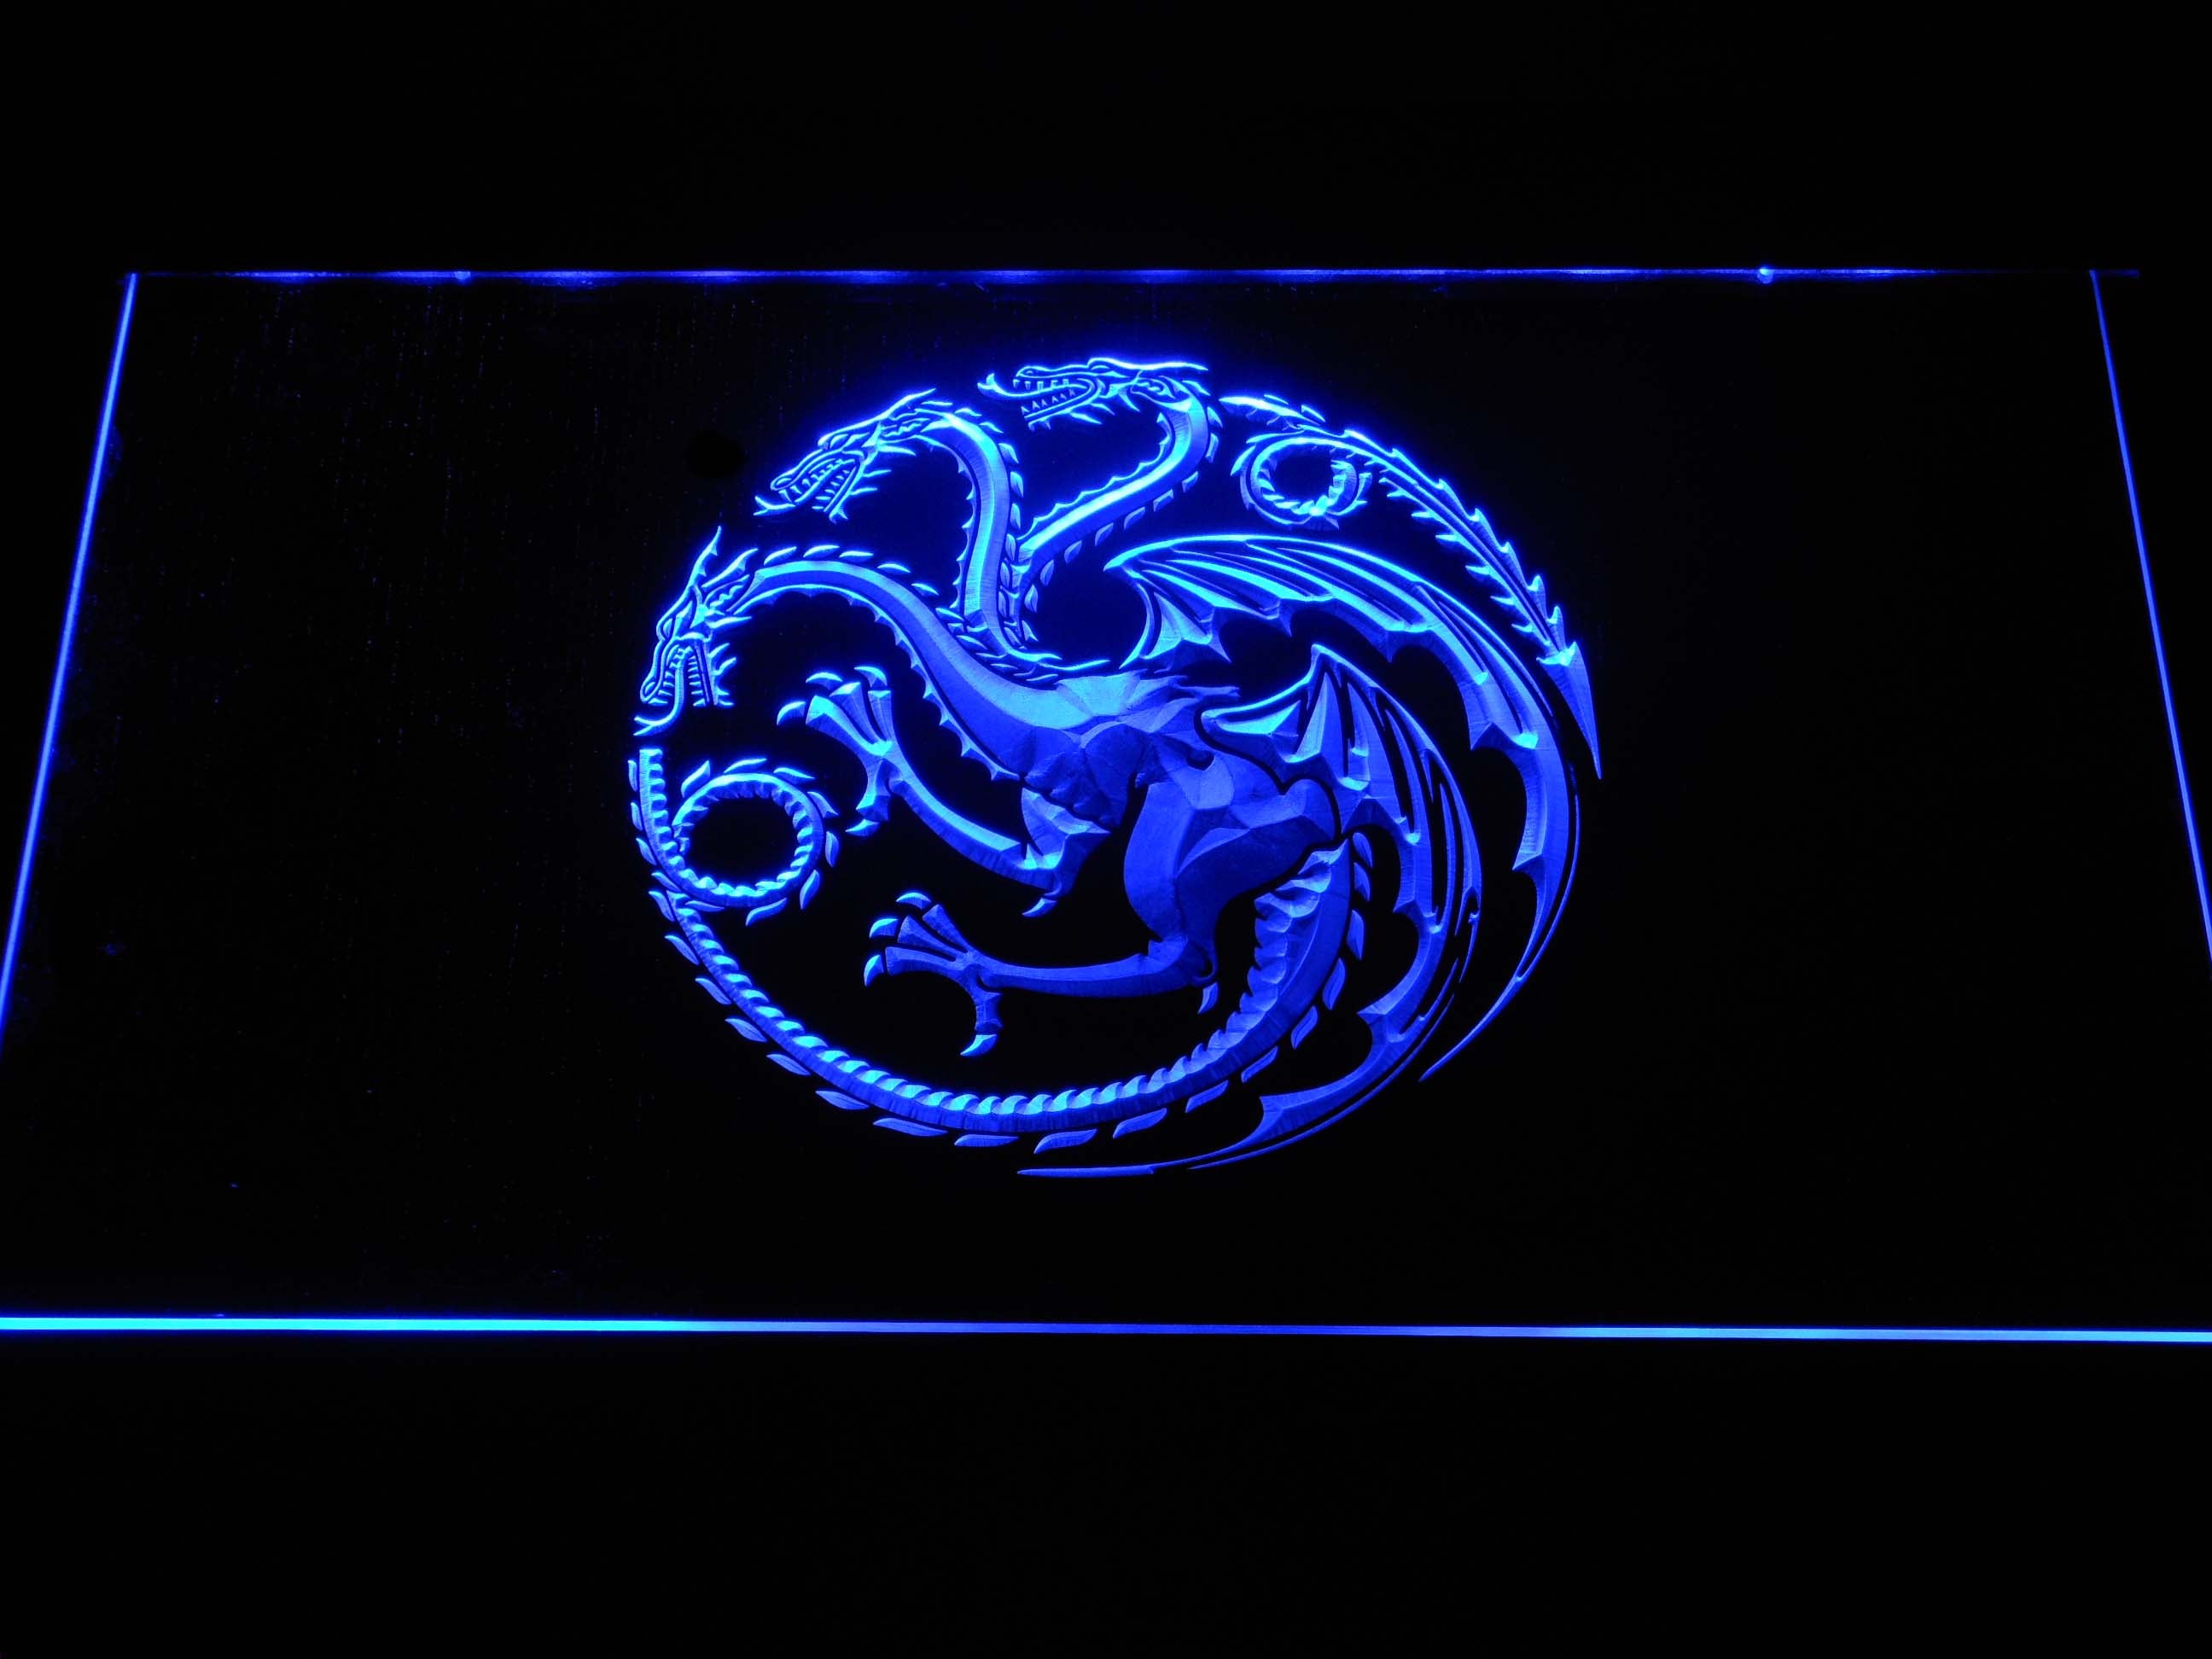 Game Of Thrones Targaryen Three-Headed Dragon Sigil Neon Light LED Sign